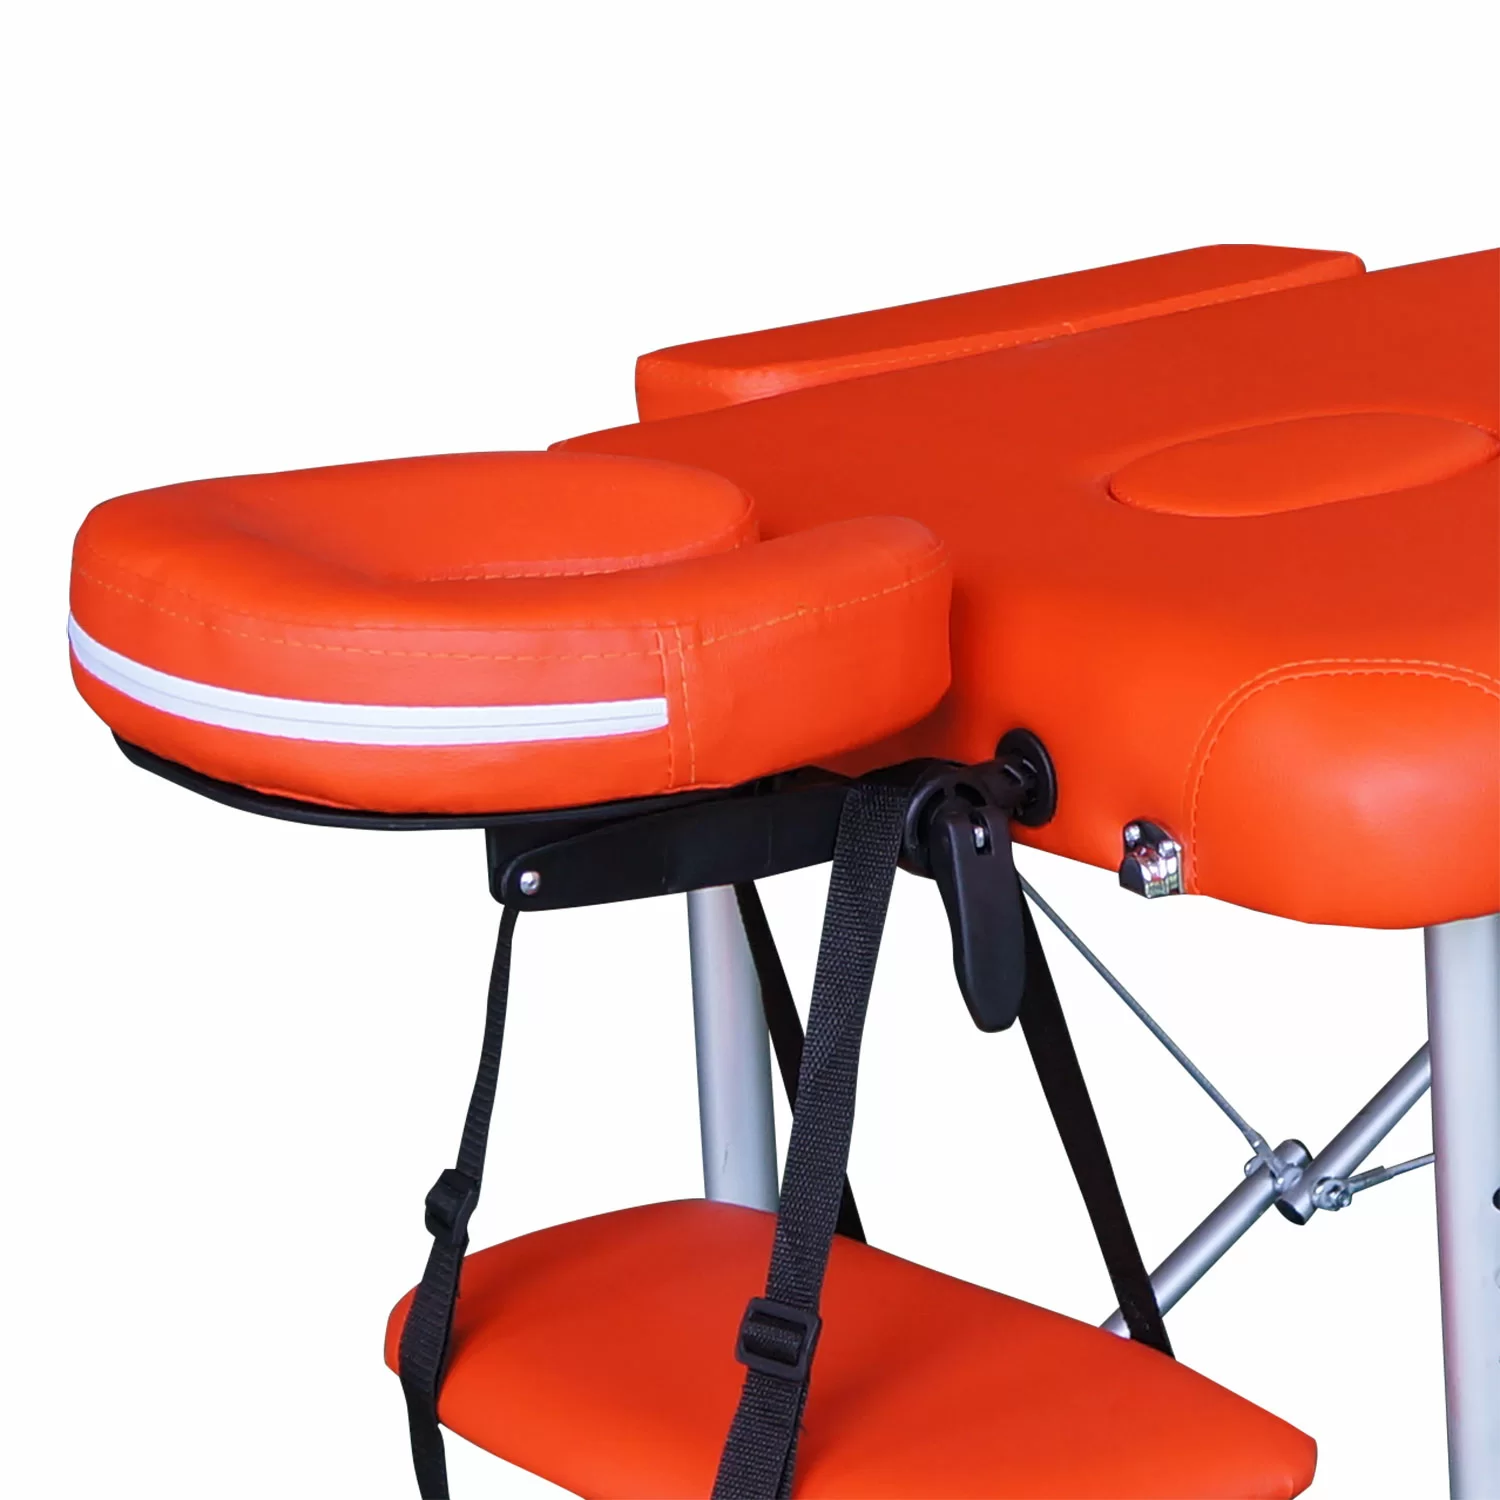 Реальное фото Массажный стол DFC NIRVANA, Elegant, 186х60х4 см, алюм. ножки, цвет оранжевый (Orange) TS2010_Or от магазина СпортЕВ